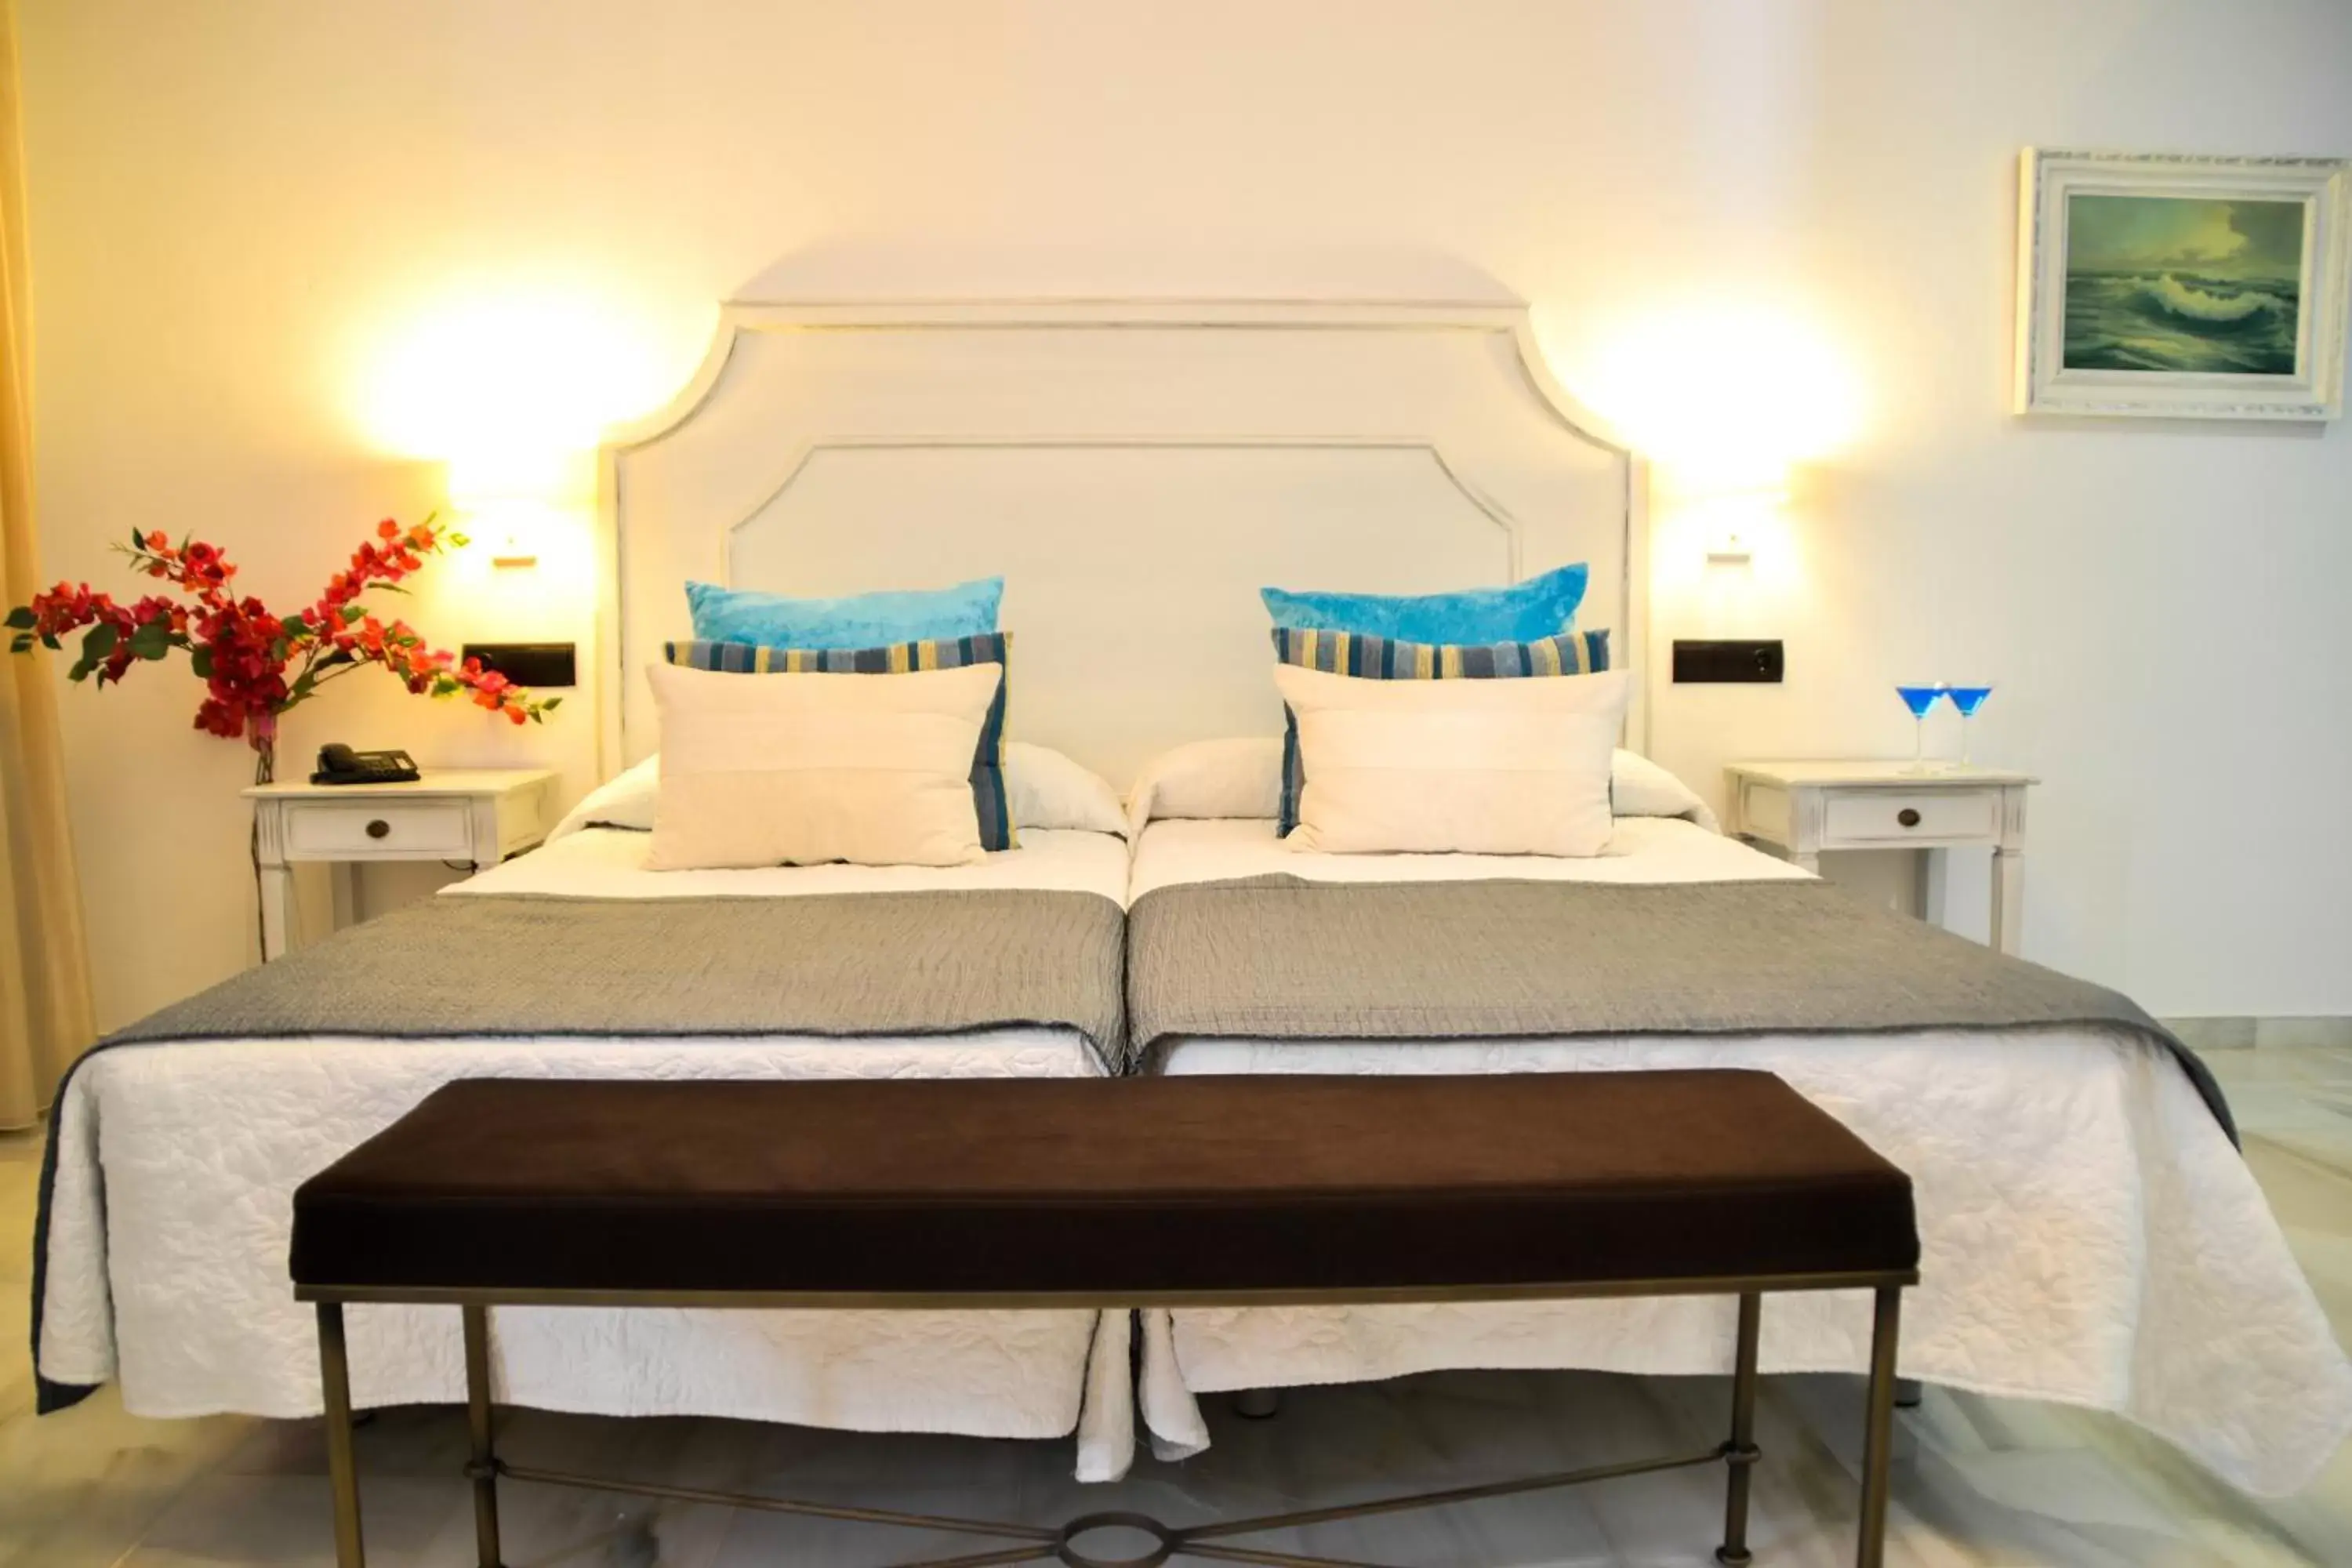 Bed, Room Photo in Hotel La Fonda